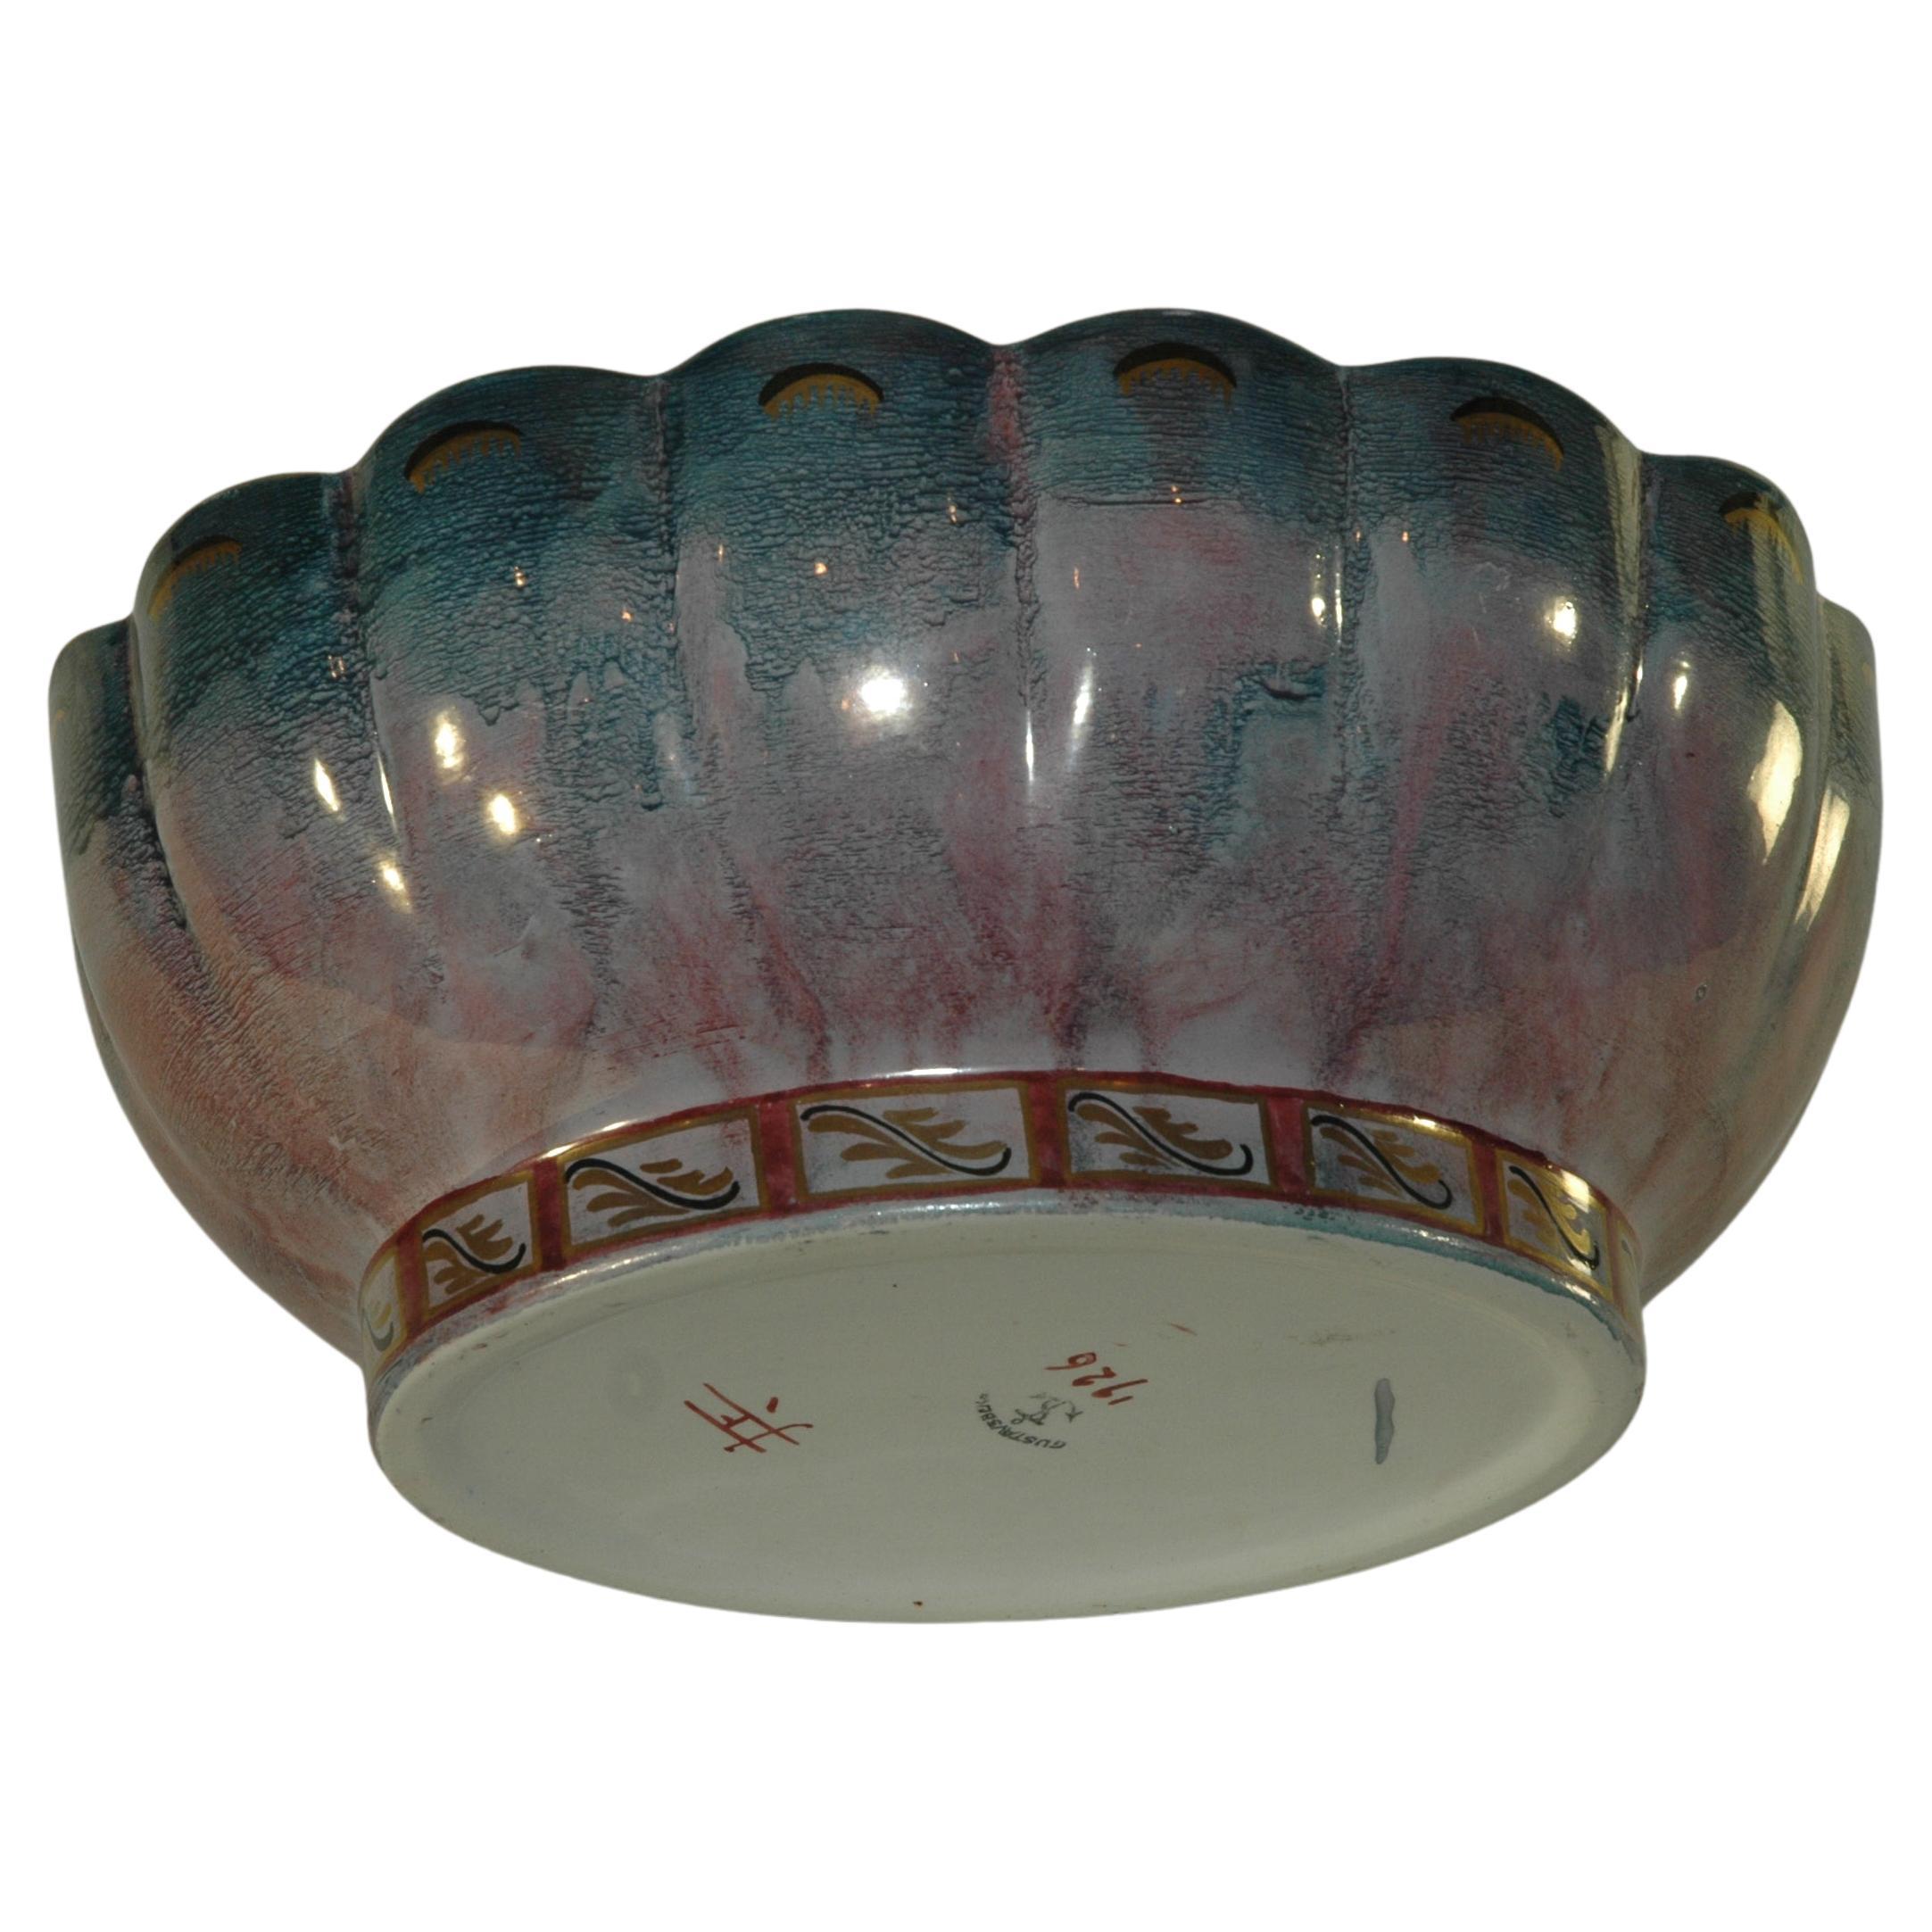 Beautiful Art Nouveau bowl by the famous designer Josef Ekberg at Gustavsberg For Sale